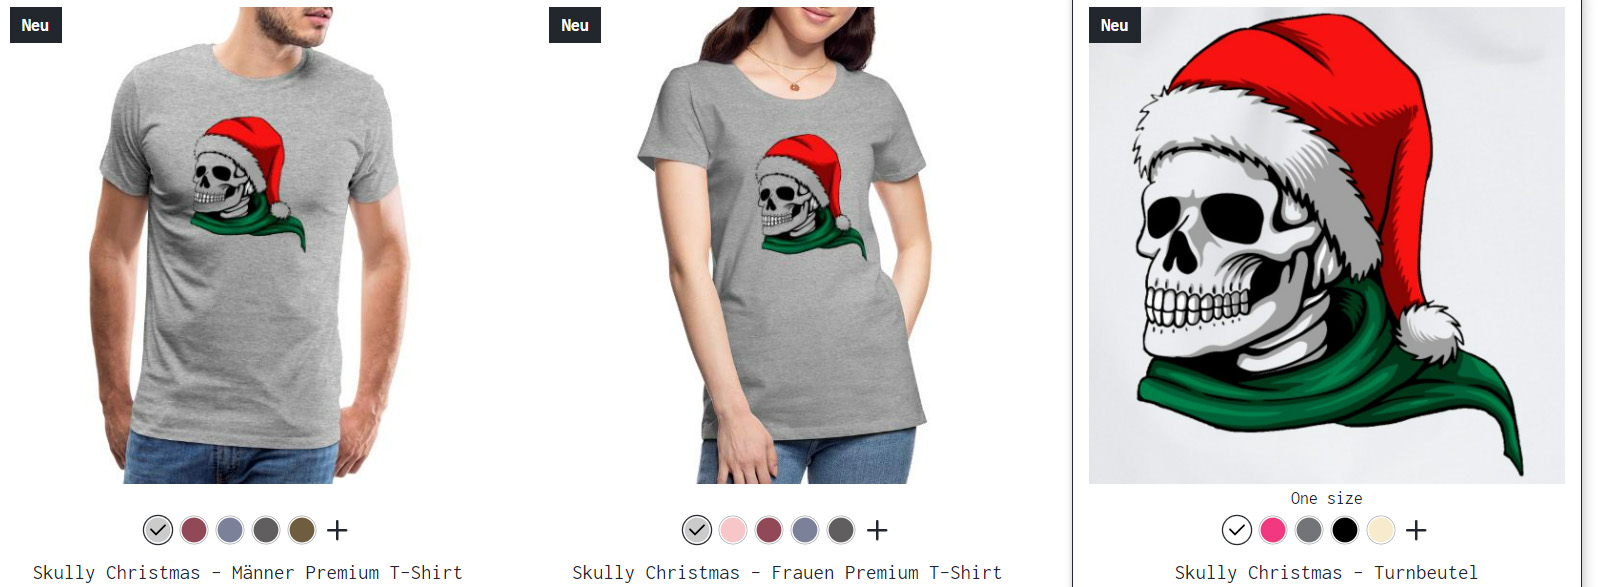 Skully Christmas Shirt Design